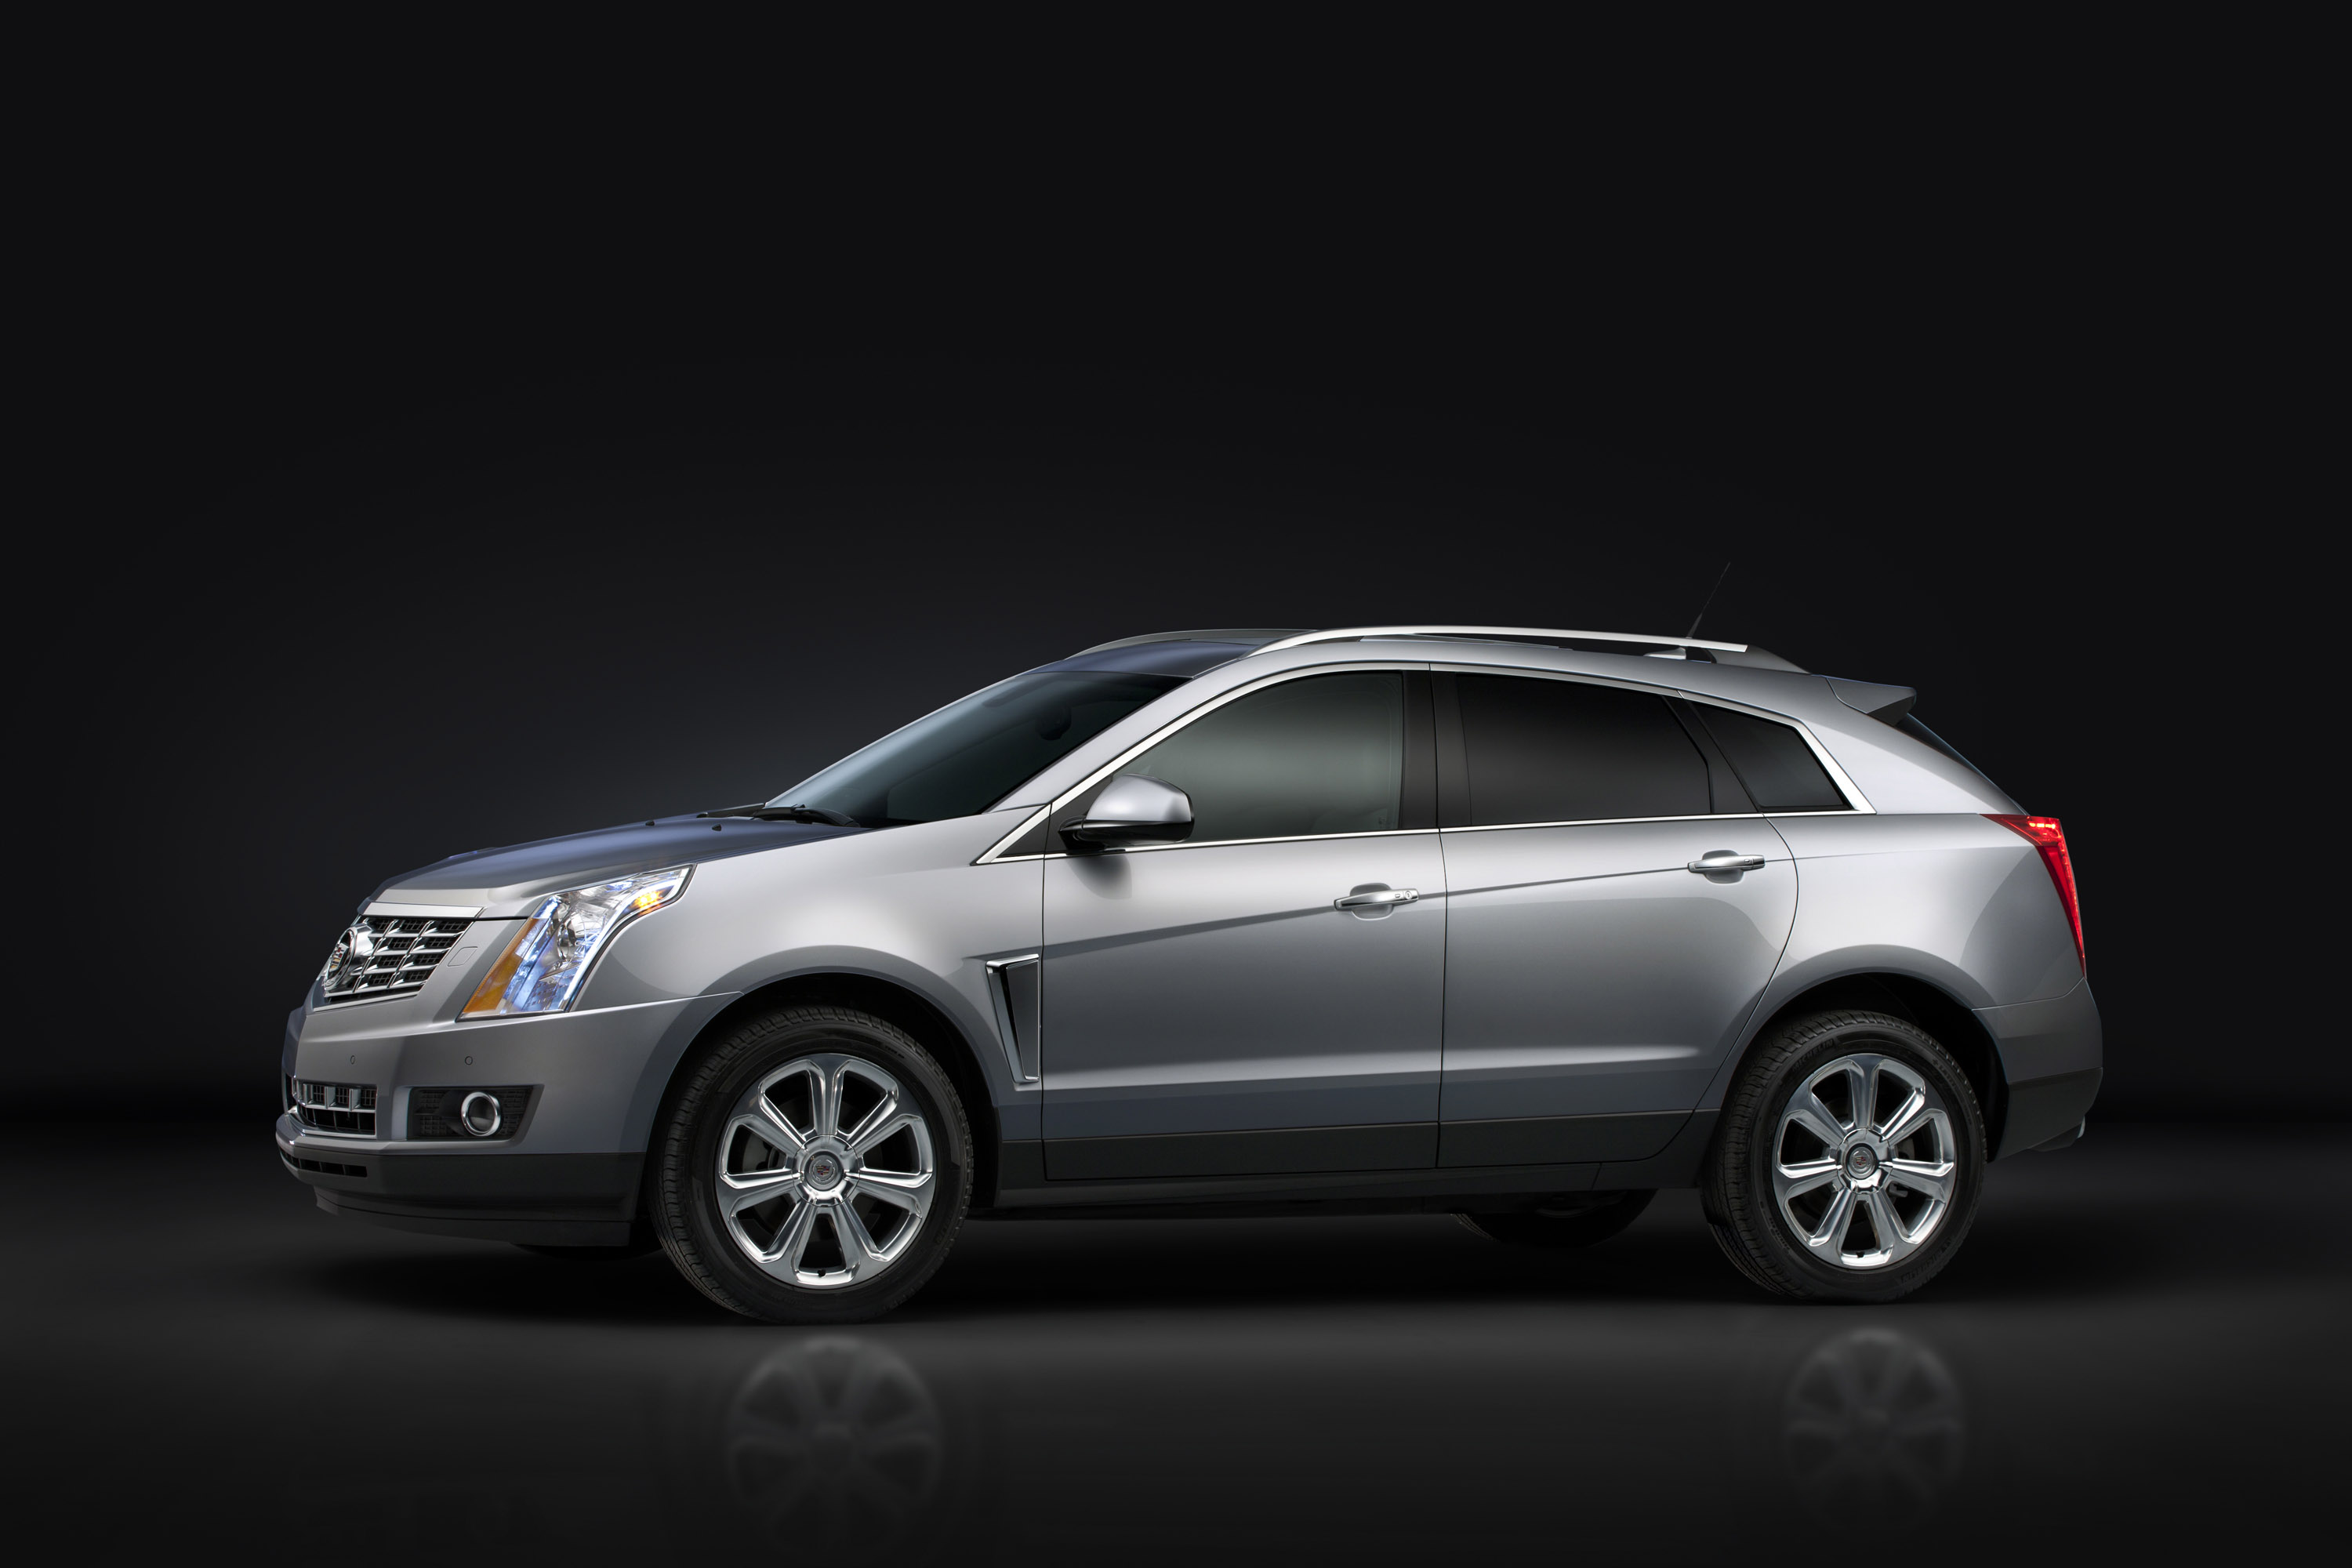 2013 Cadillac SRX Luxury Crossover